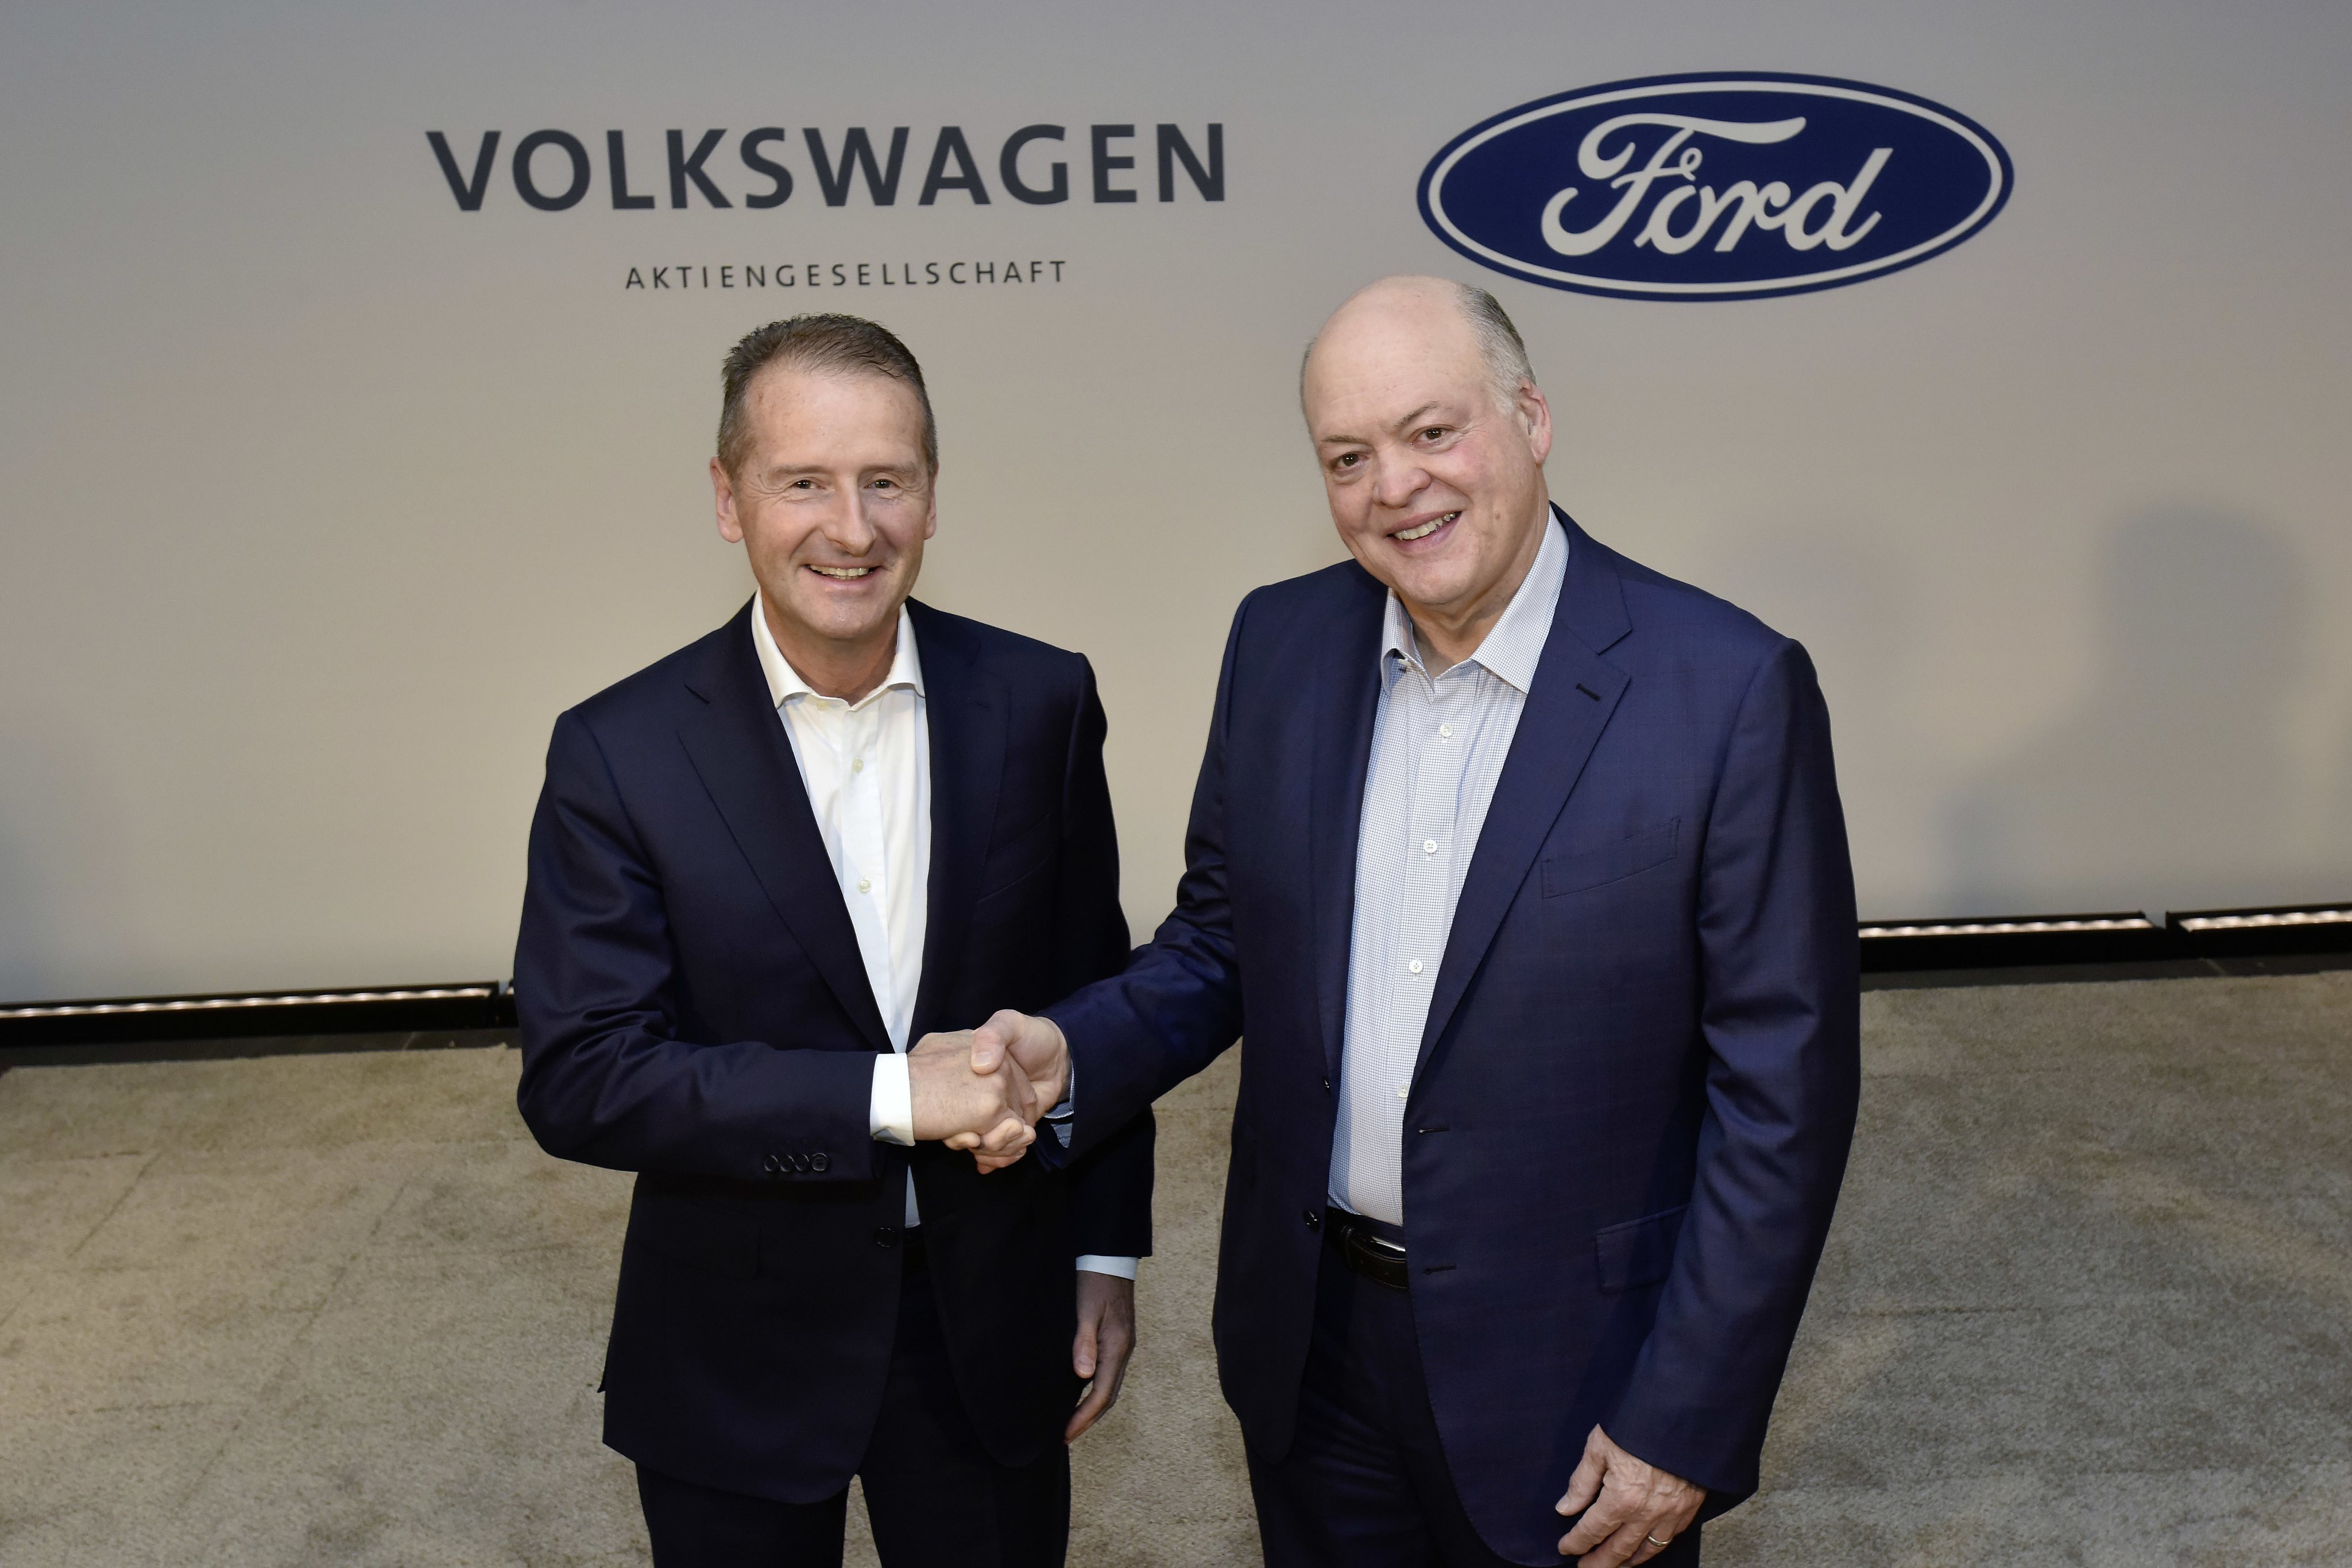 Volkswagen CEO Dr. Herbert Diess e Ford President and CEO Jim Hackett